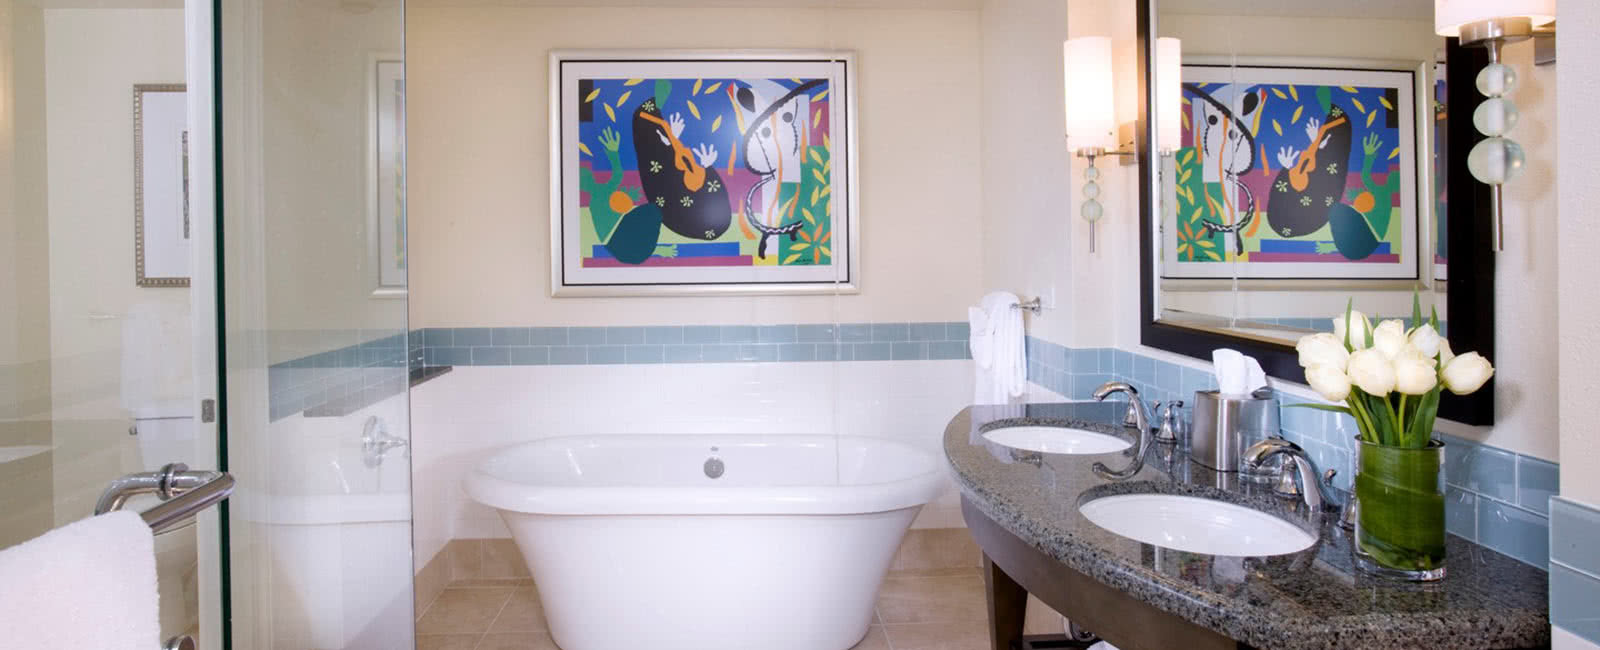 Bathroom at Parc Soleil by Hilton Grand Vacations Club in Orlando, Florida